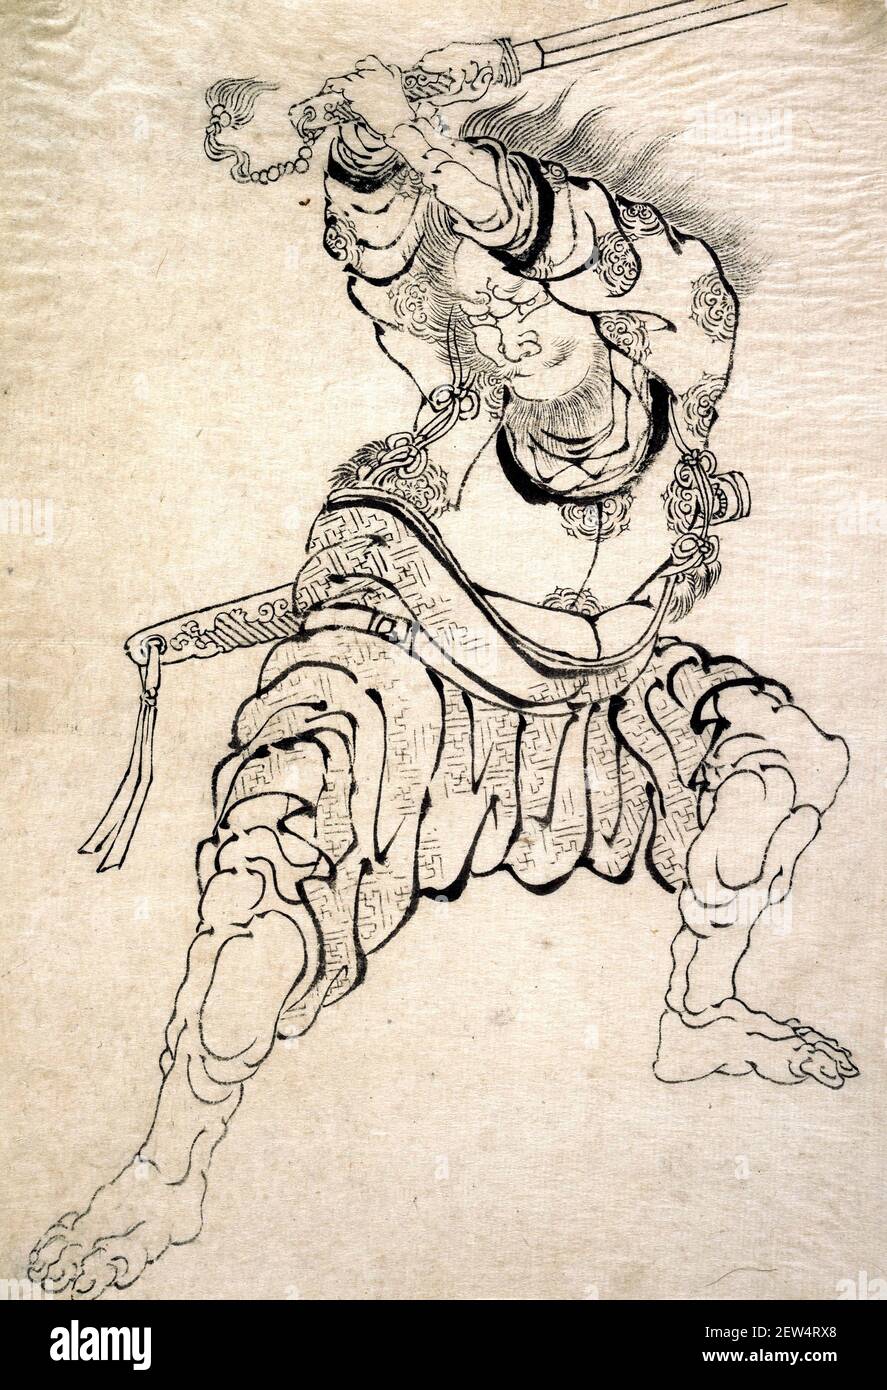 Hokusai. A Warrior by the Japanese artist and printmaker, Katsushika Hokusai (葛飾 北斎, c. 1760-1849), monochrome woodblock print, ink on paper Stock Photo